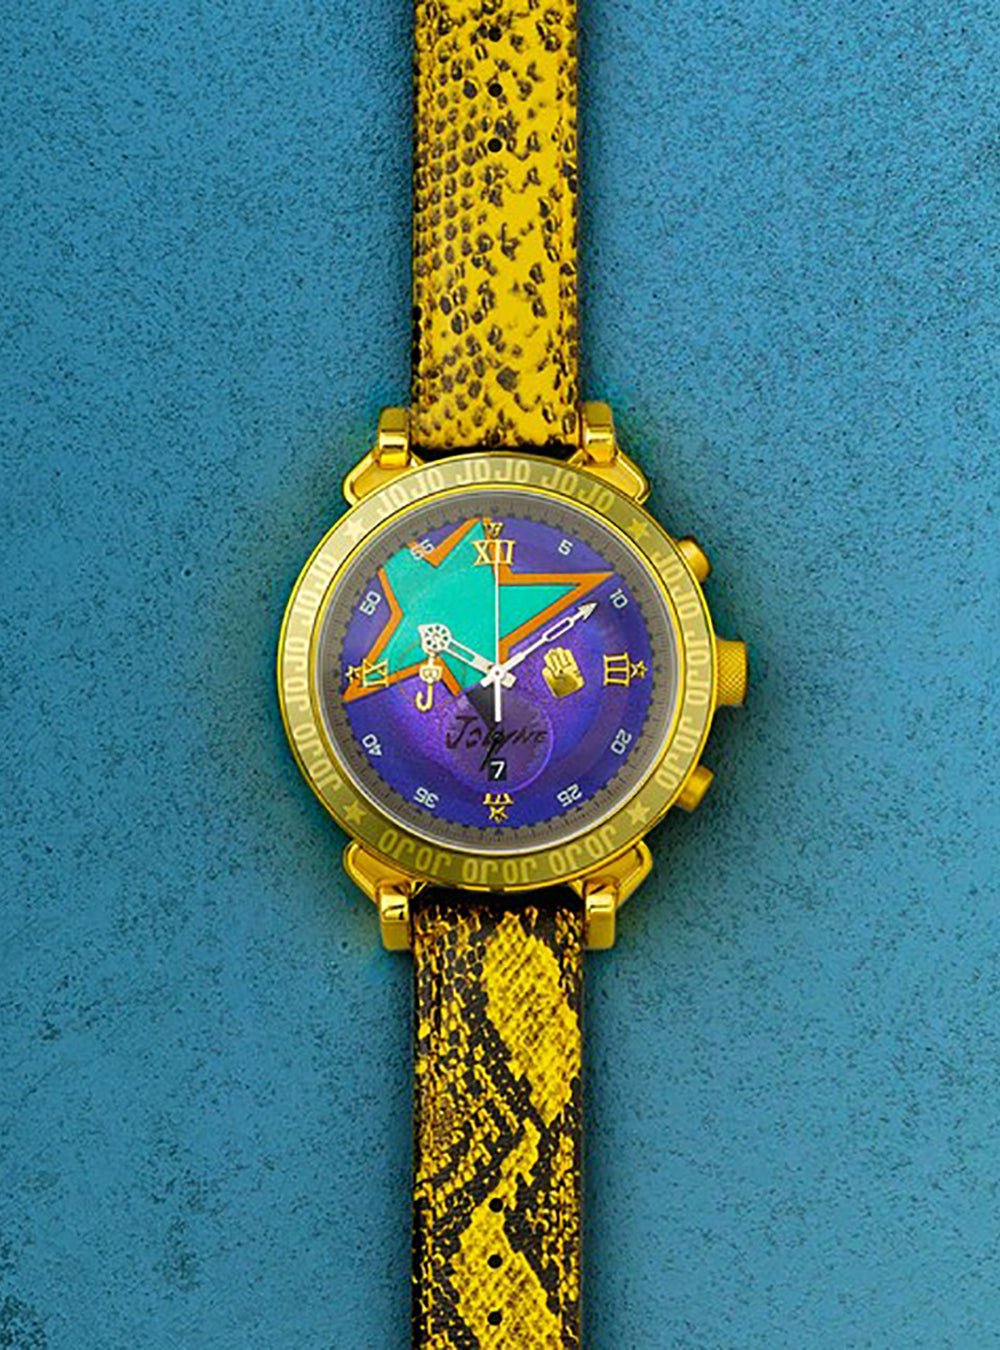 Rolex Rolex New Arrival Watch - Bizarre at Rs 989/piece | रोलेक्स वॉच,  रोलेक्स घड़ी - Fezacart, Malappuram | ID: 2853256255455